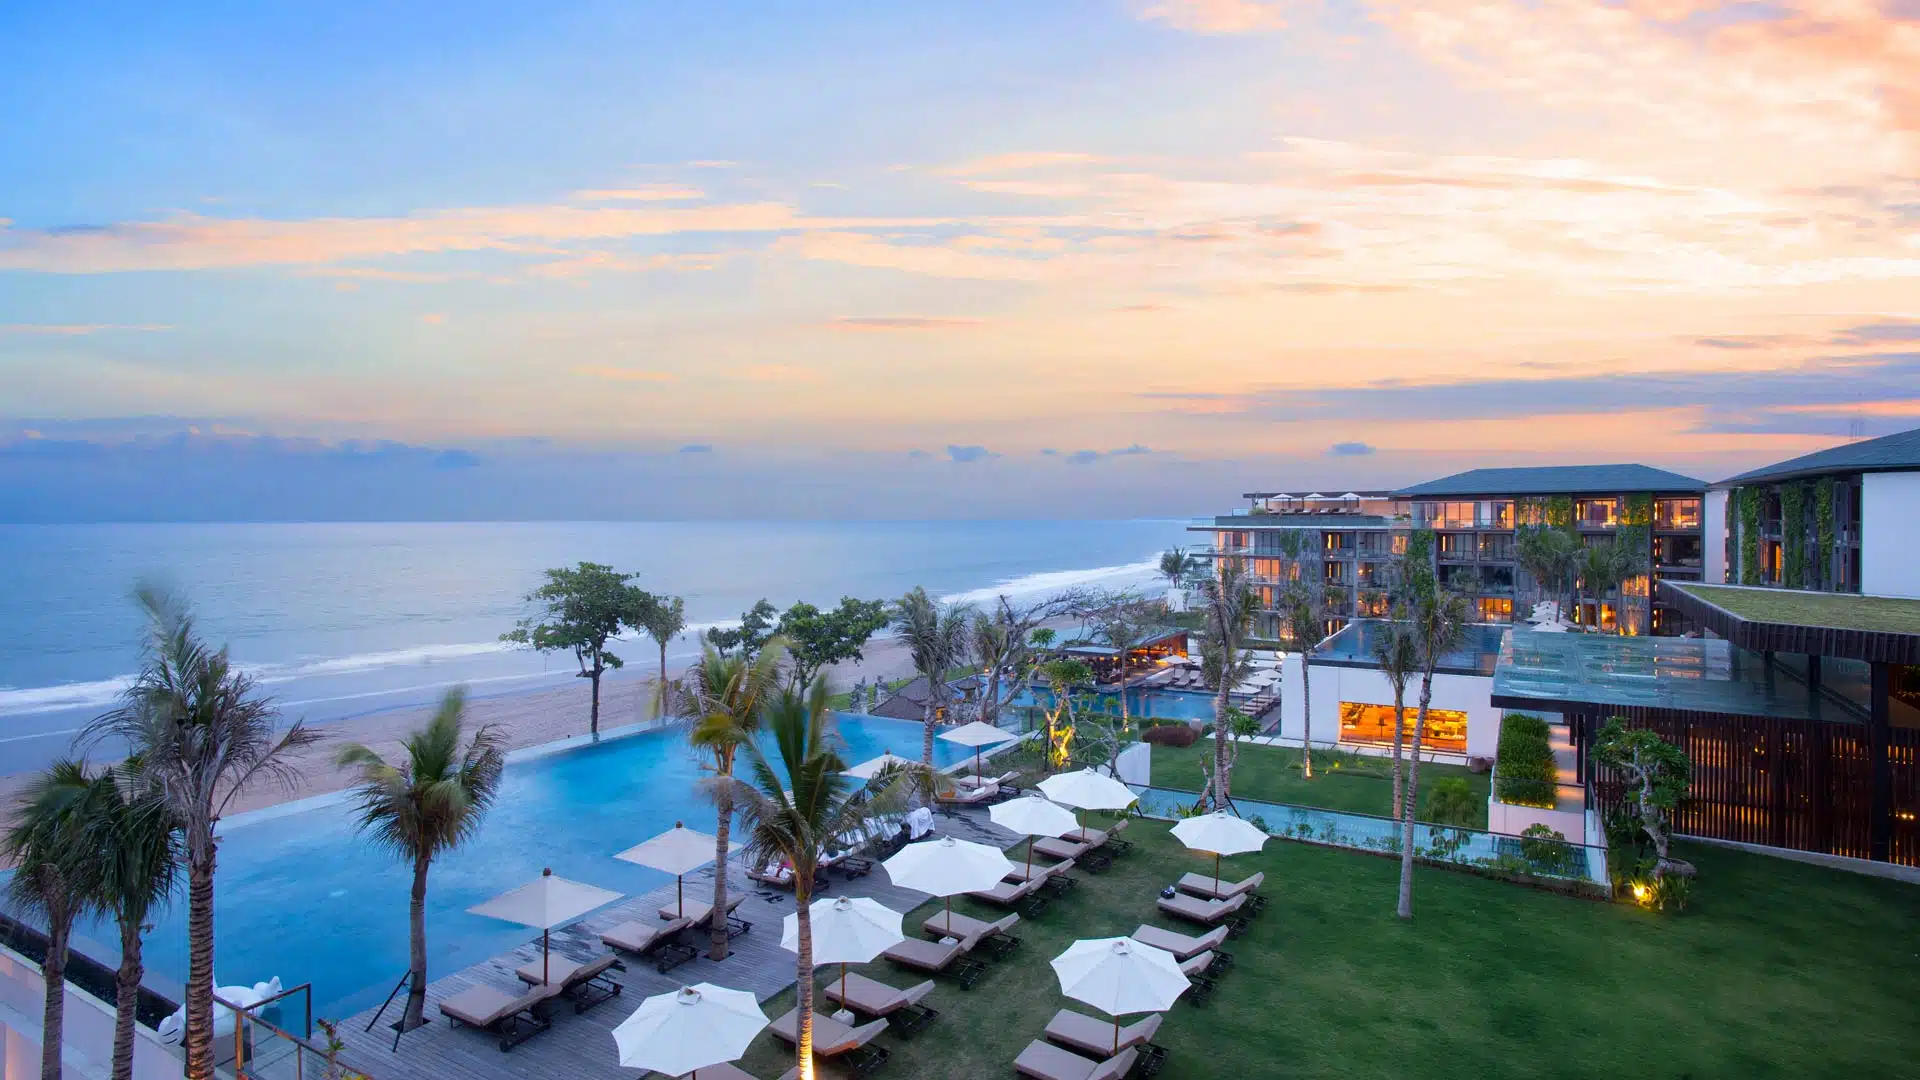 Alila Seminyak - The Best Hotel in Bali #luxury #luxuryhotels